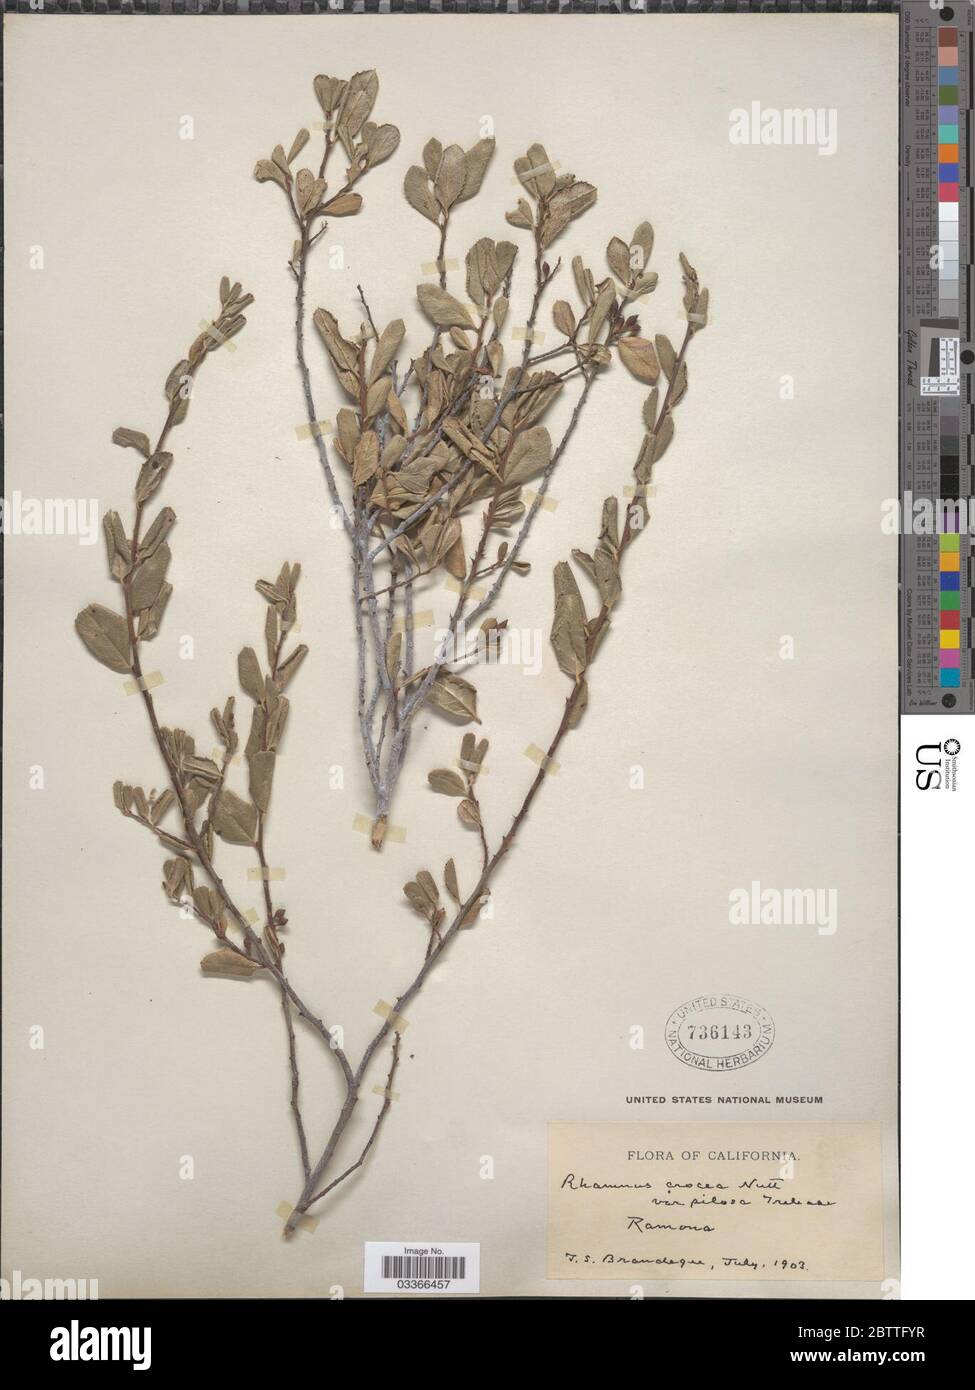 Rhamnus crocea var pilosa Trel ex Curran. Stock Photo